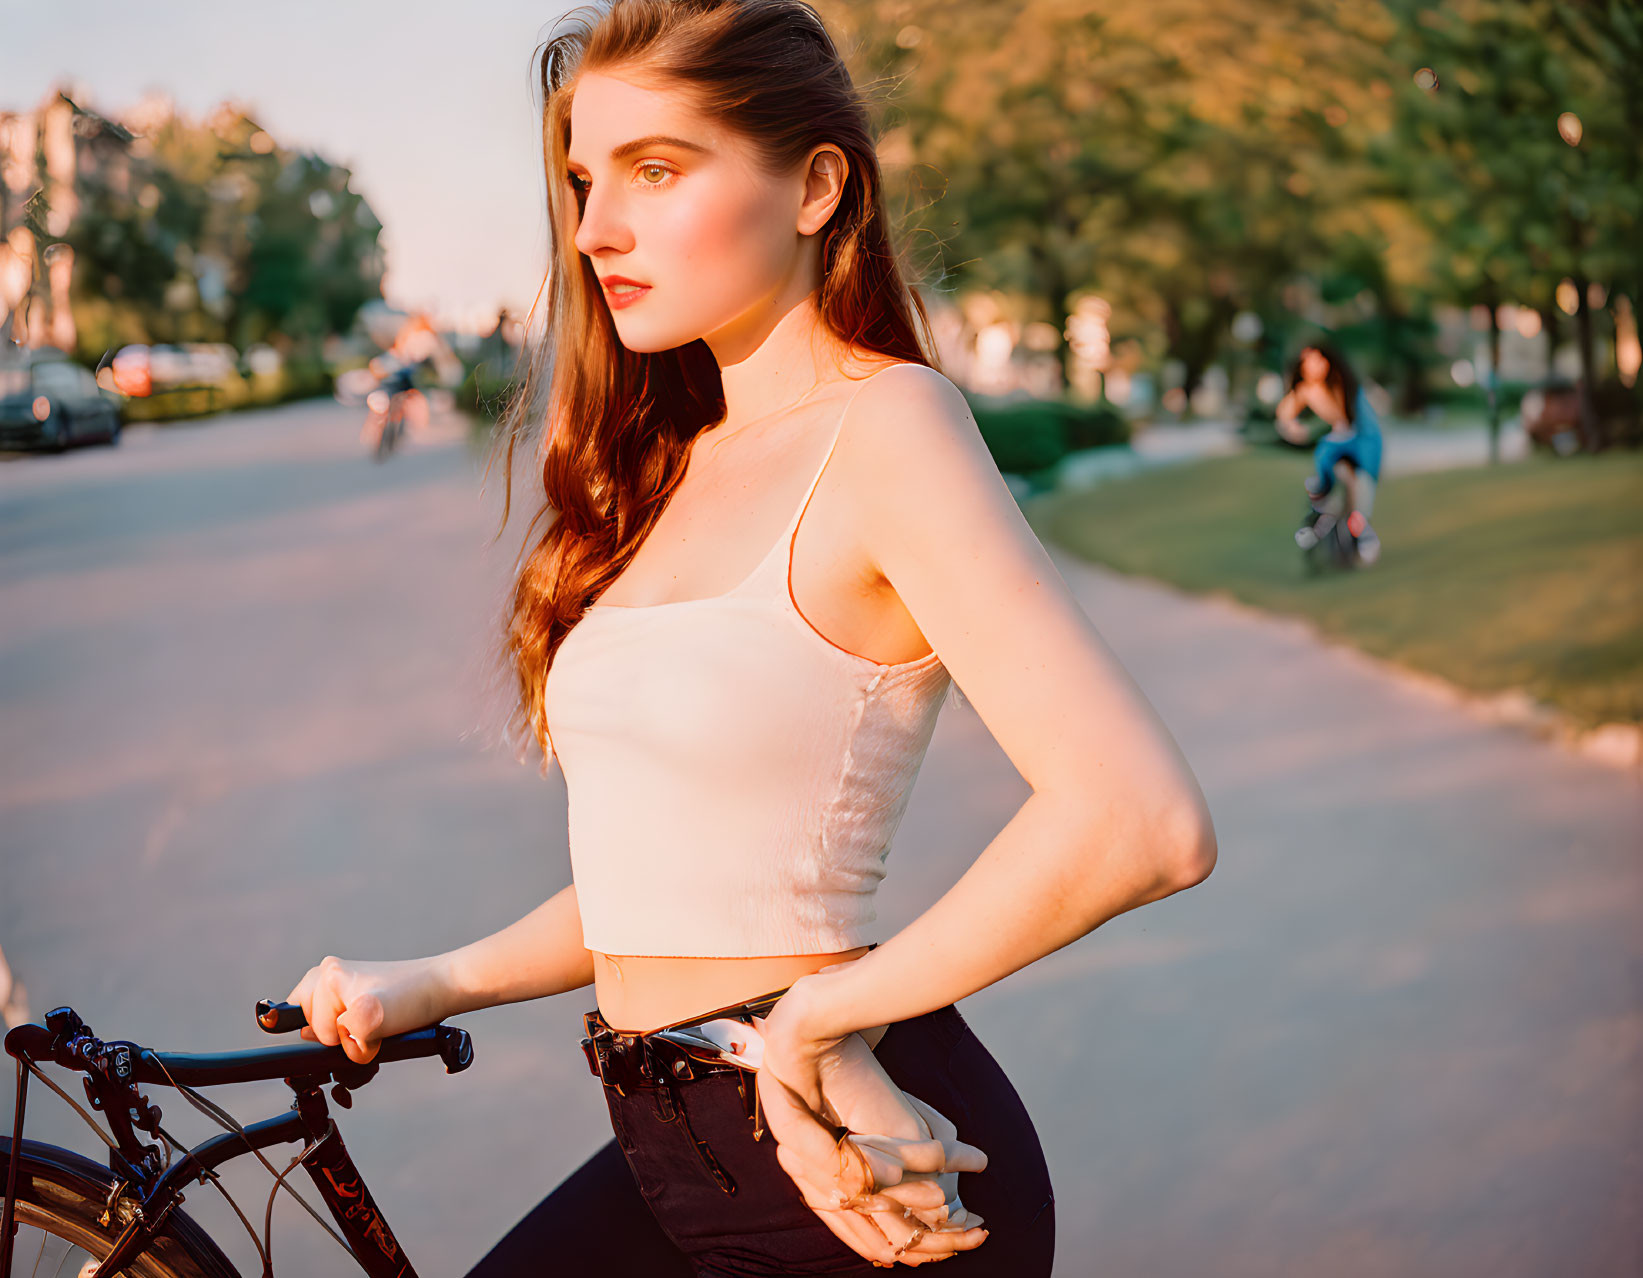 Beautiful girl with a bike